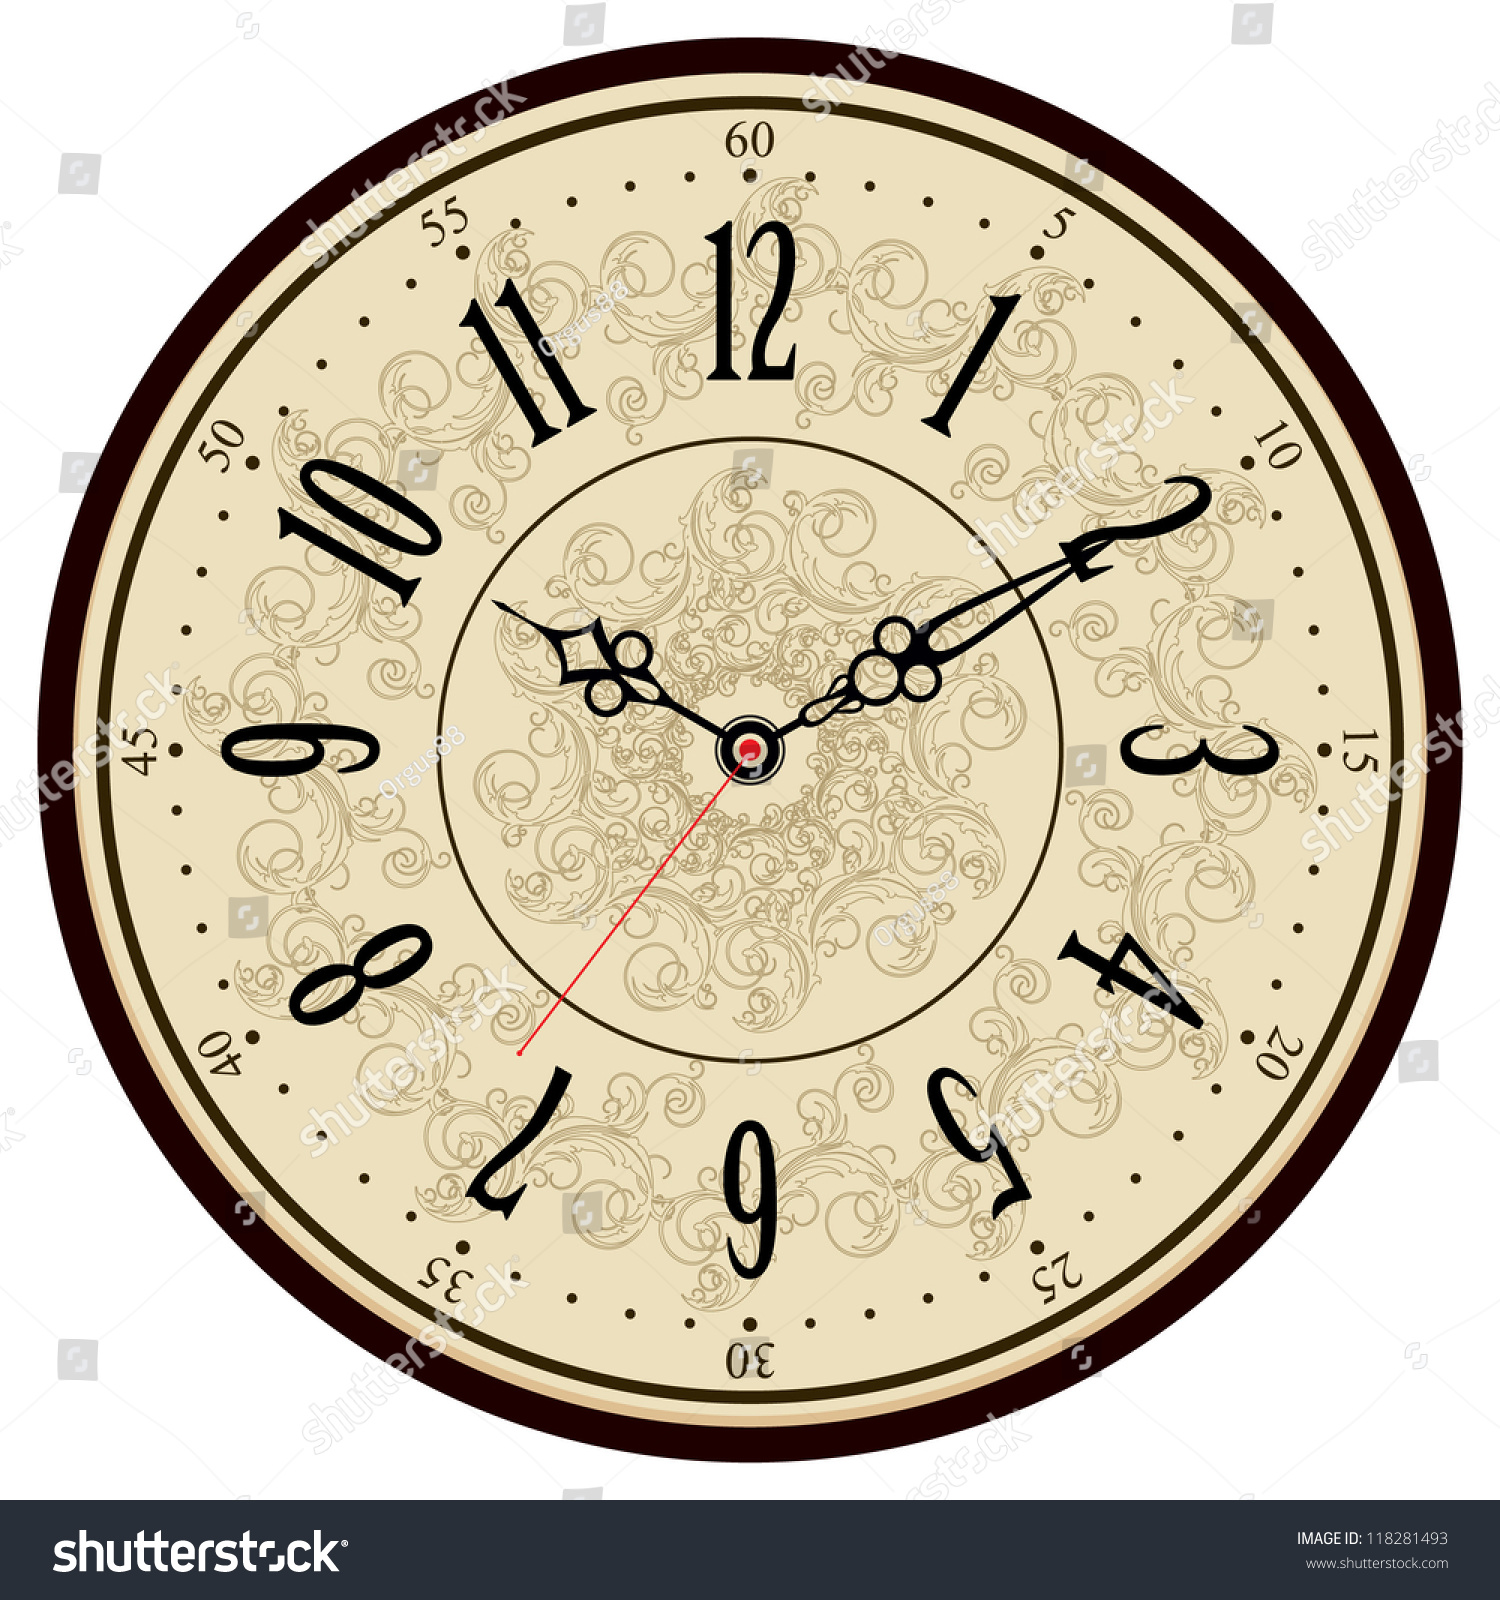 Vector Old Vintage Clock Face Stock Vector 118281493 - Shutterstock